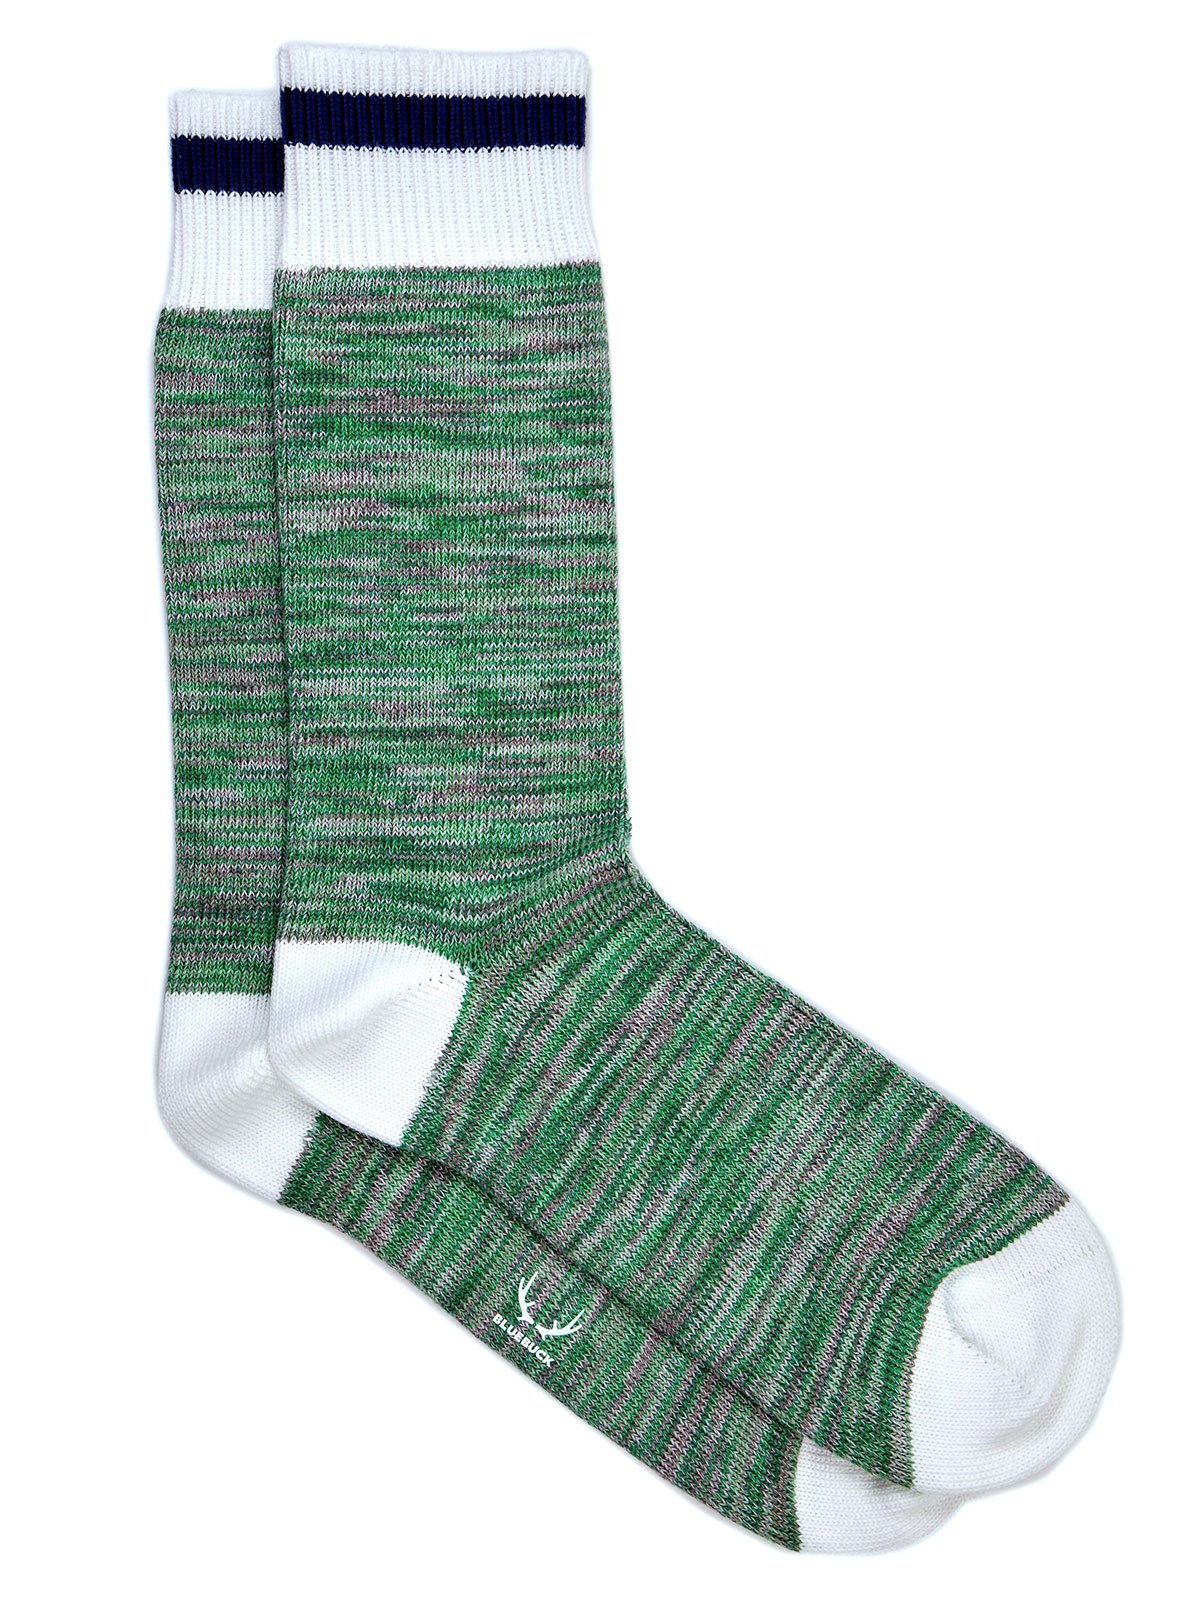 Nautical socks | Green/White